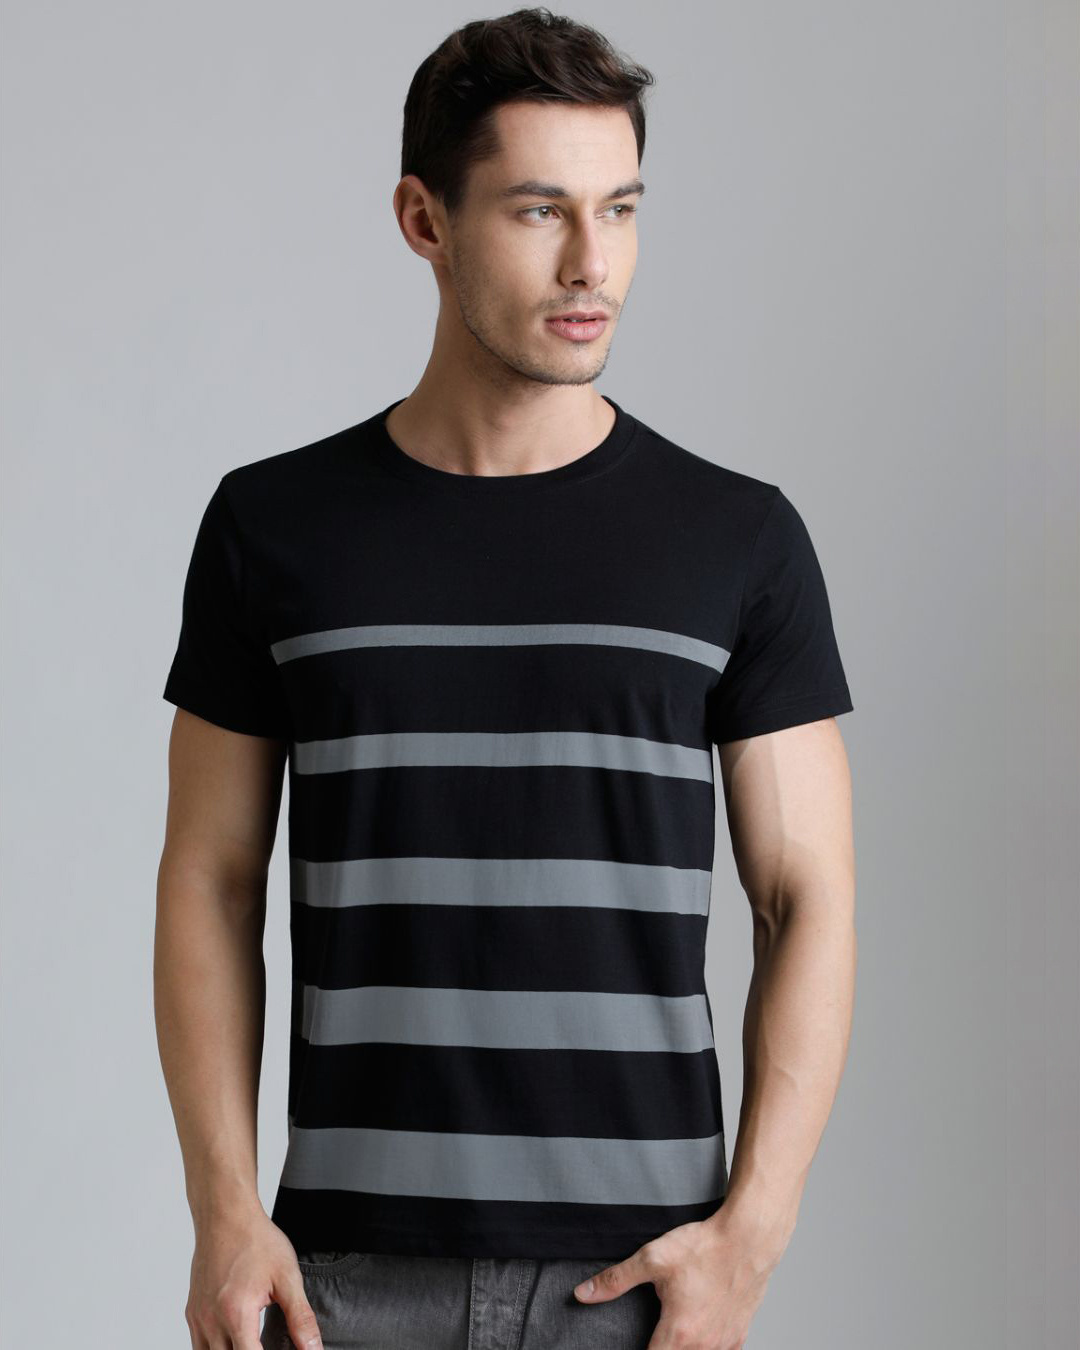 Buy Men's Black & Grey Striped T-shirt Online at Bewakoof